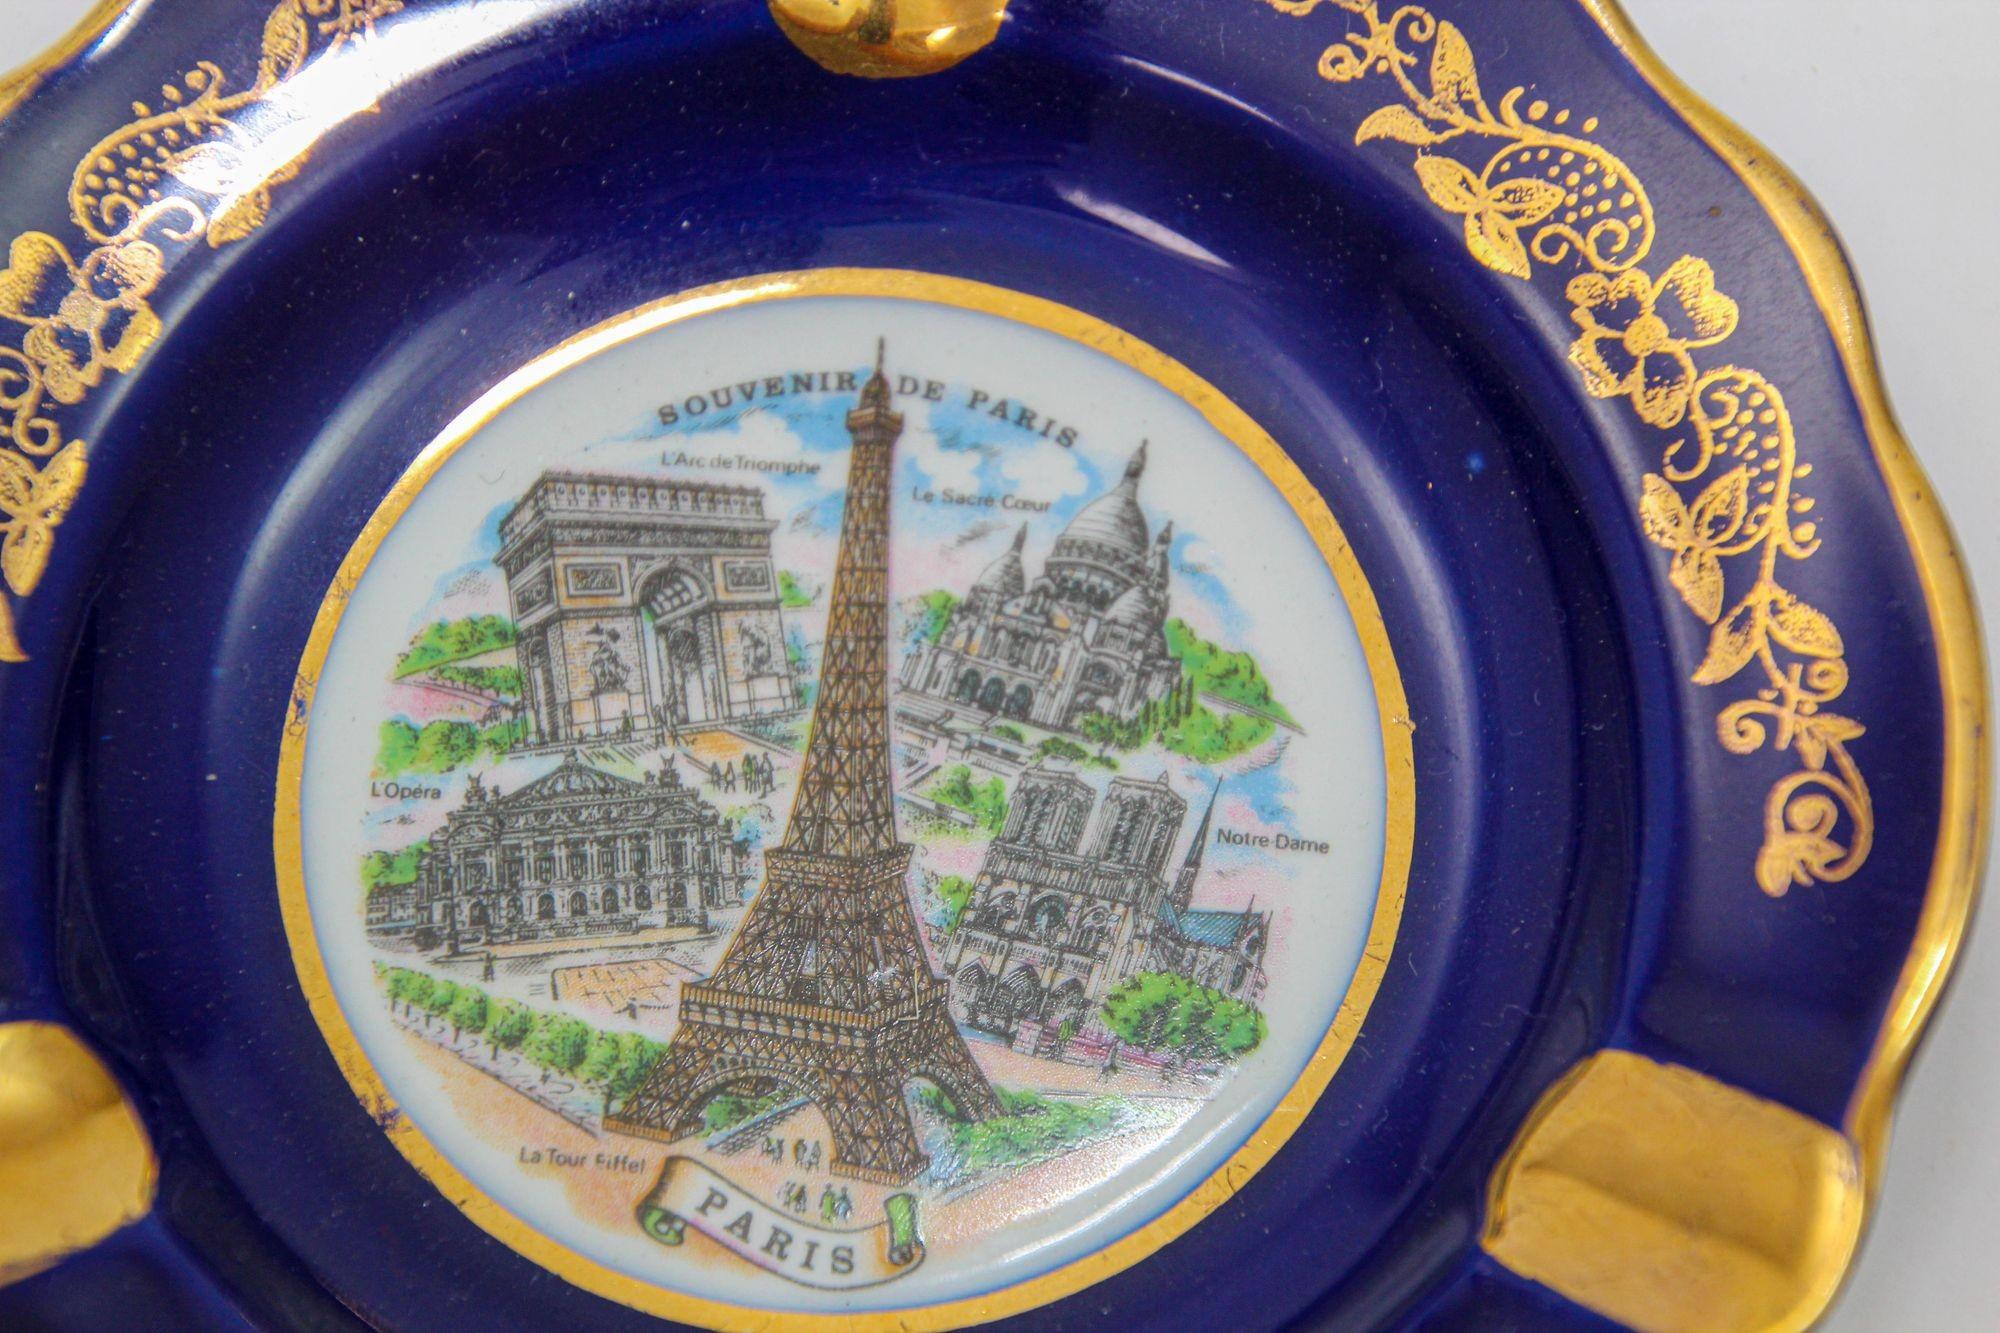 French Limoges France Porcelain Dish Ashtray Souvenir of Paris Cobalt Blue and 24K Gold For Sale